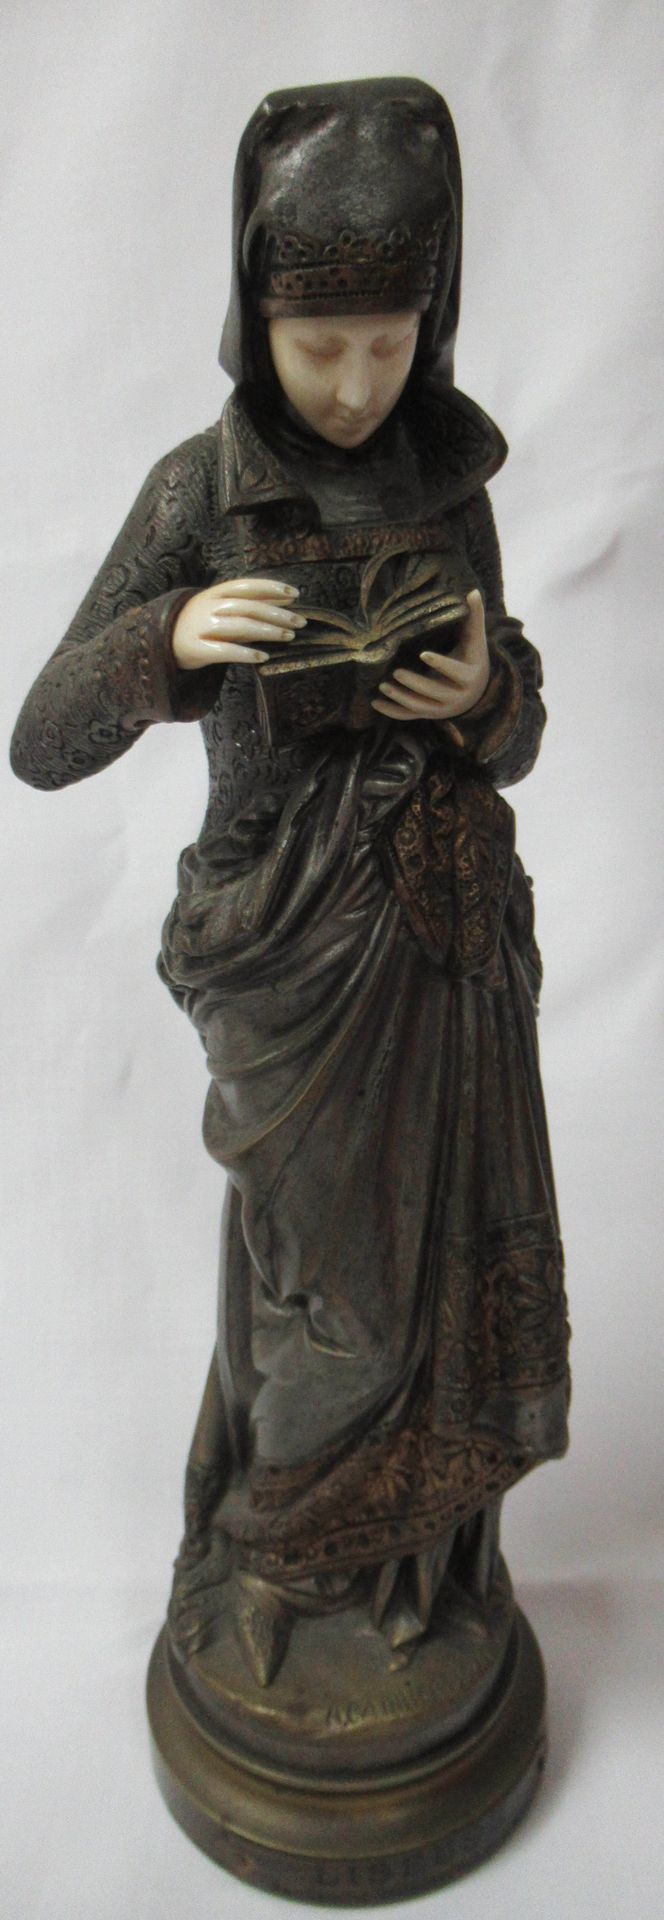 Null After Carrier-Belleuse "Liseuse" Chryséléphantine sculpture. Height: 32 cm